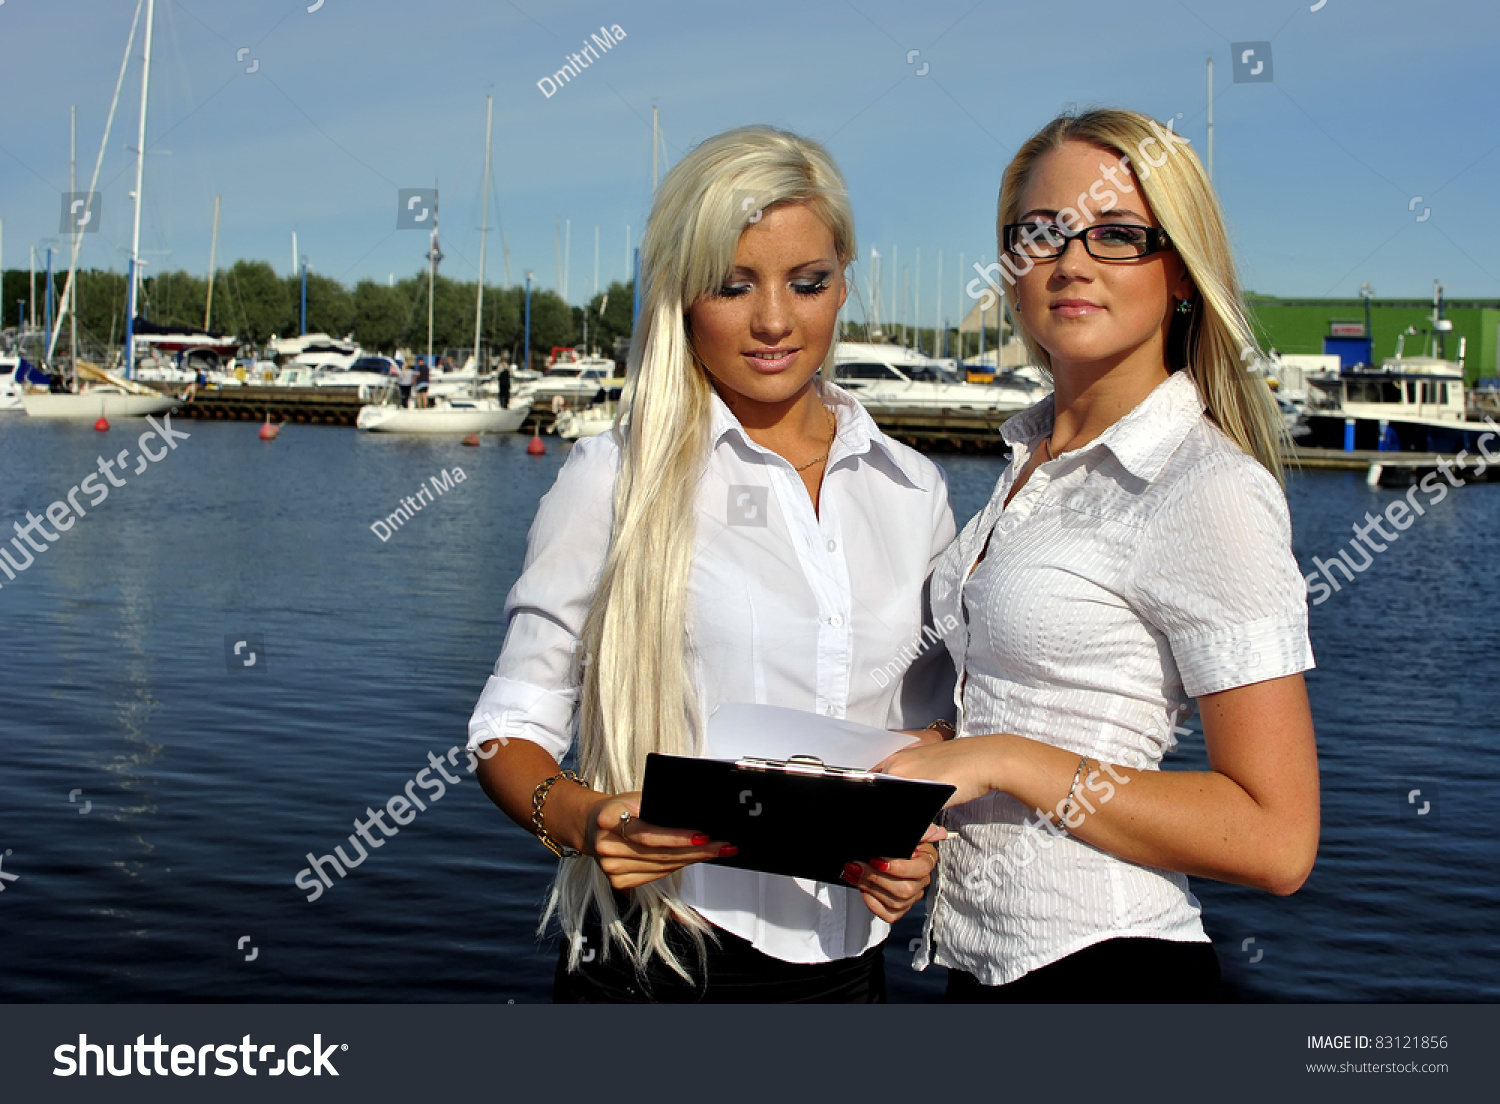 Girls on boats pics